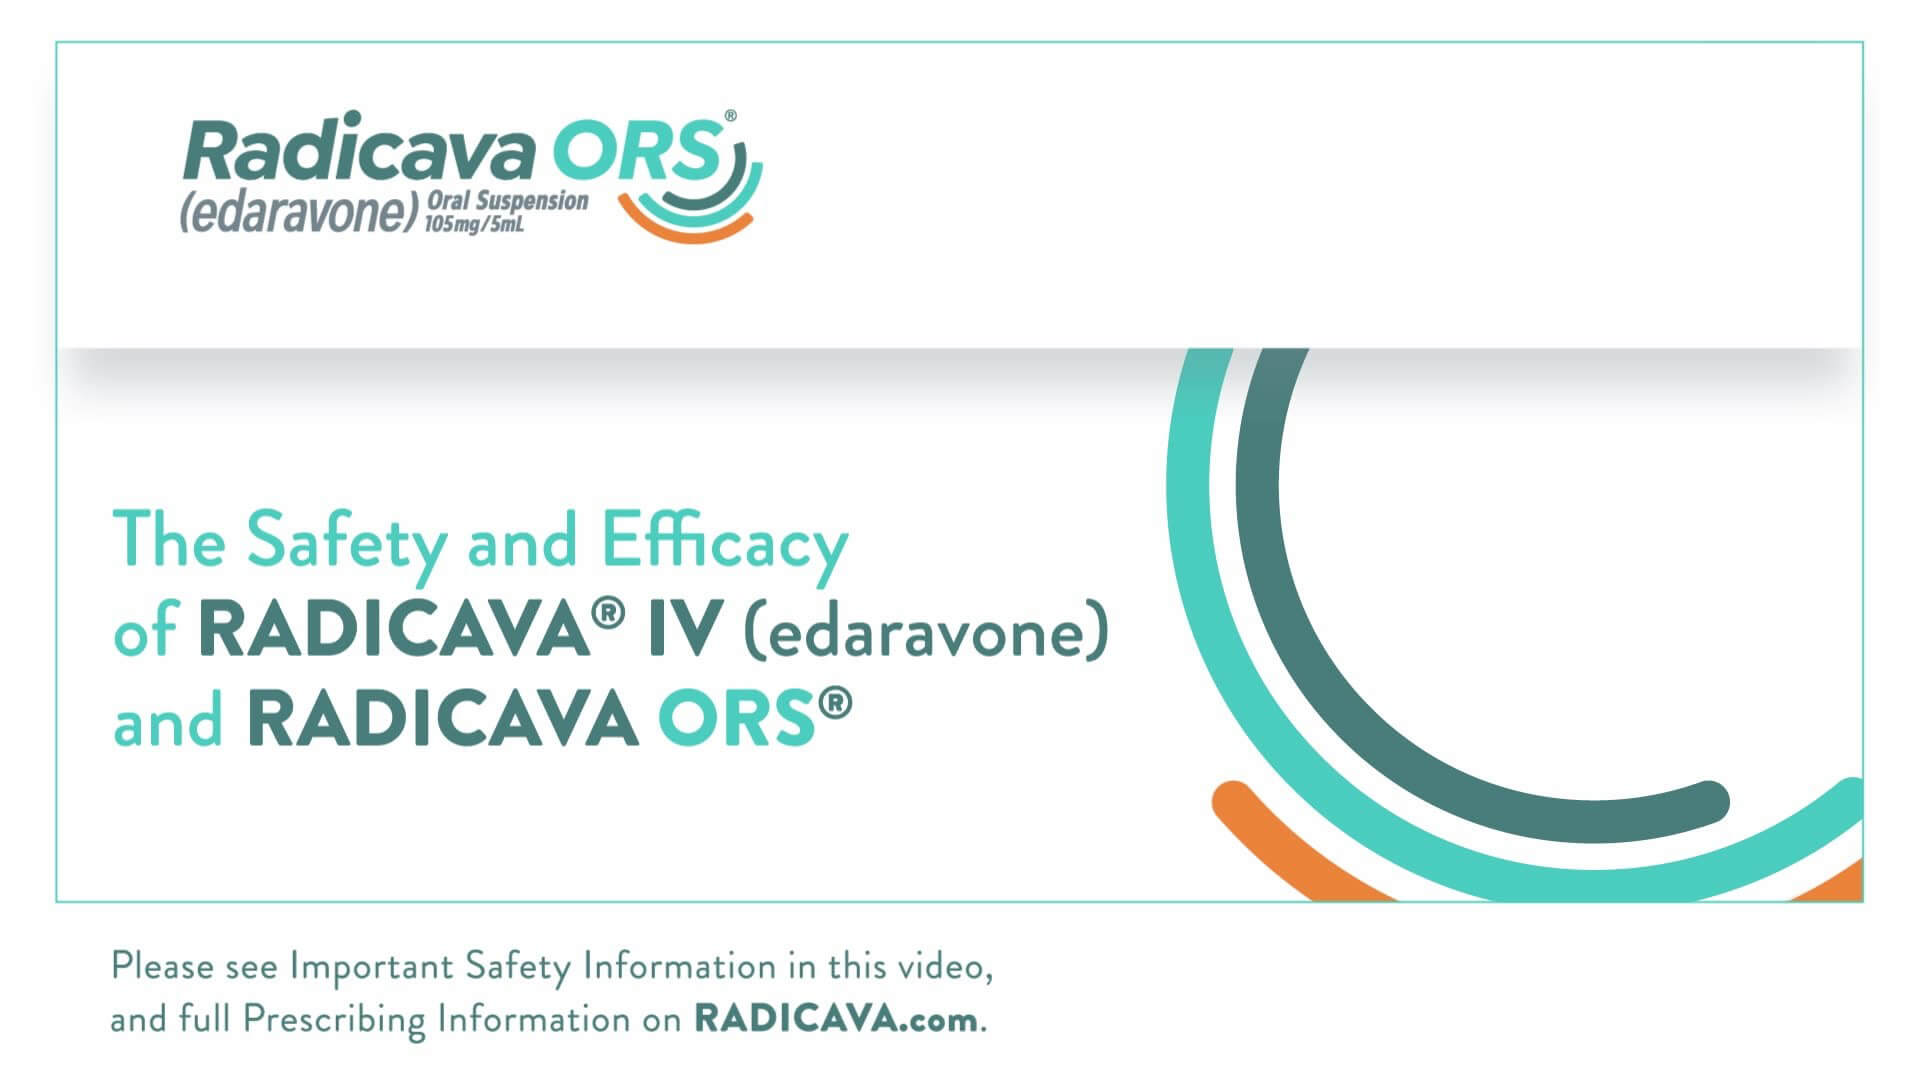 The Safety and Efficacy of RADICAVA®IV (edaravone) and RADICAVA ORS®